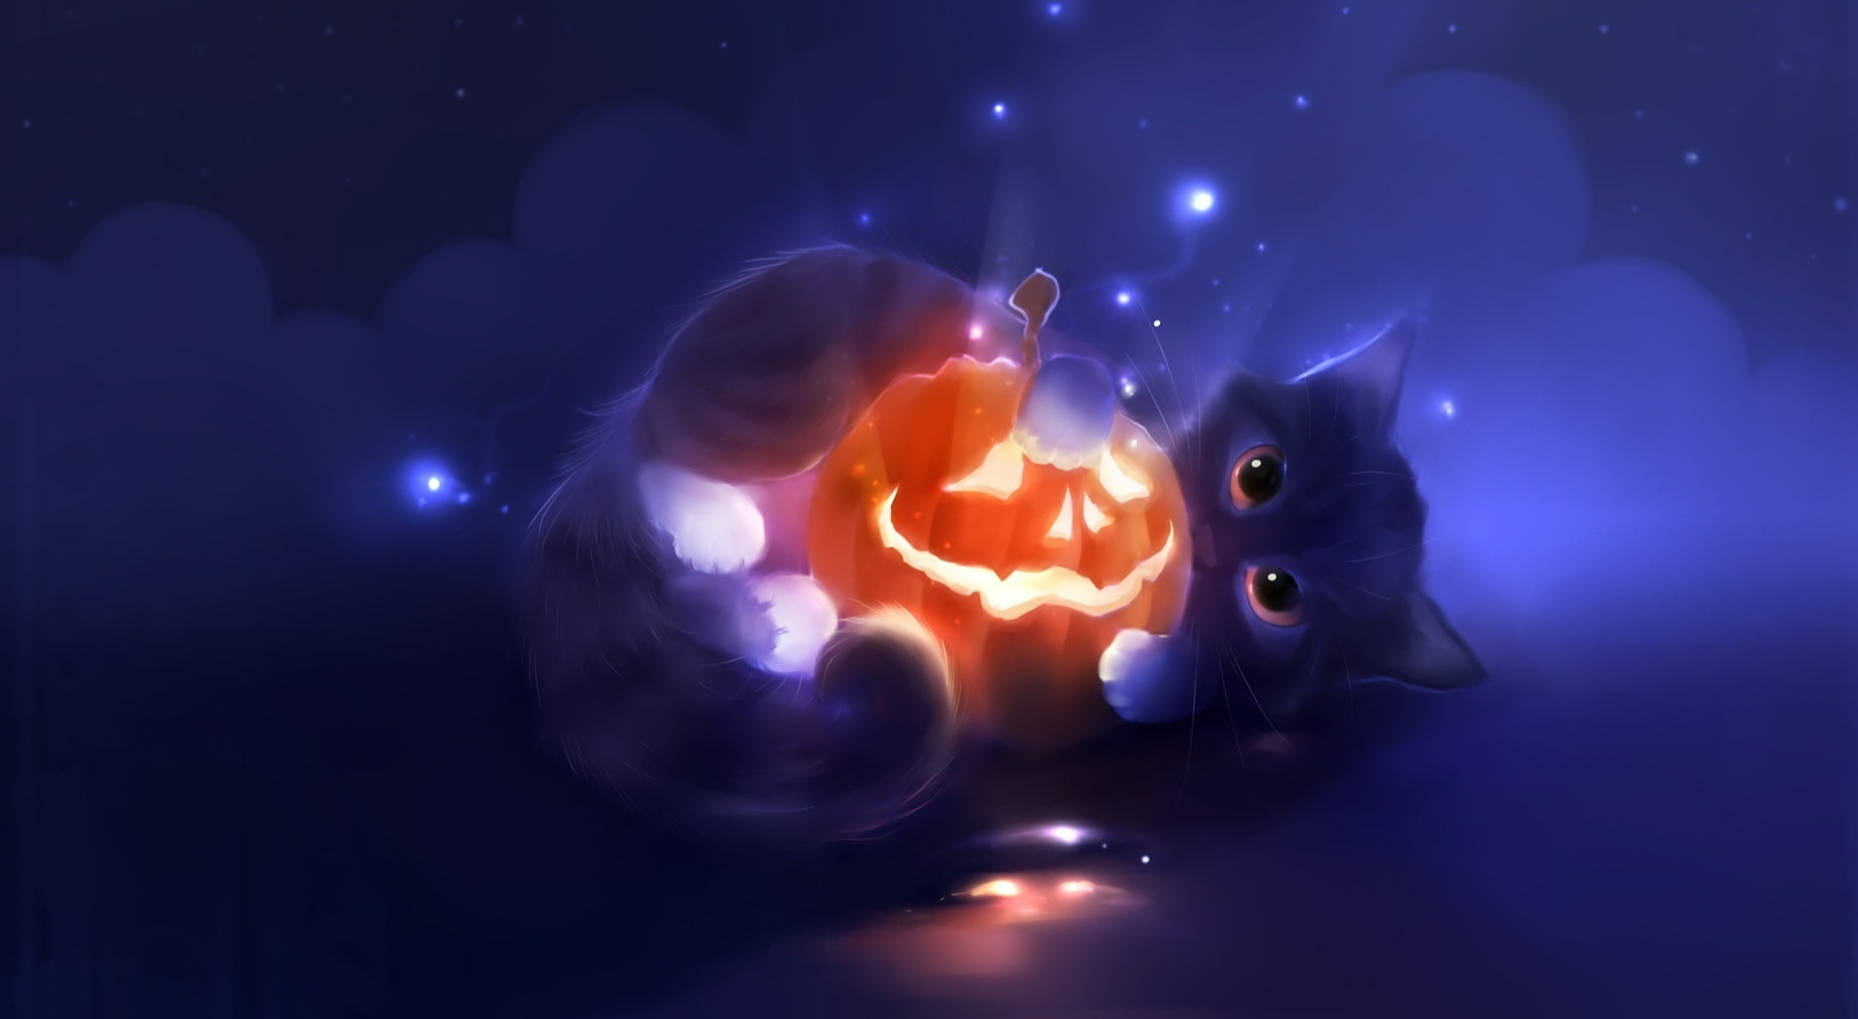 Cute Halloween Cat With Jack O' Lantern Wallpaper